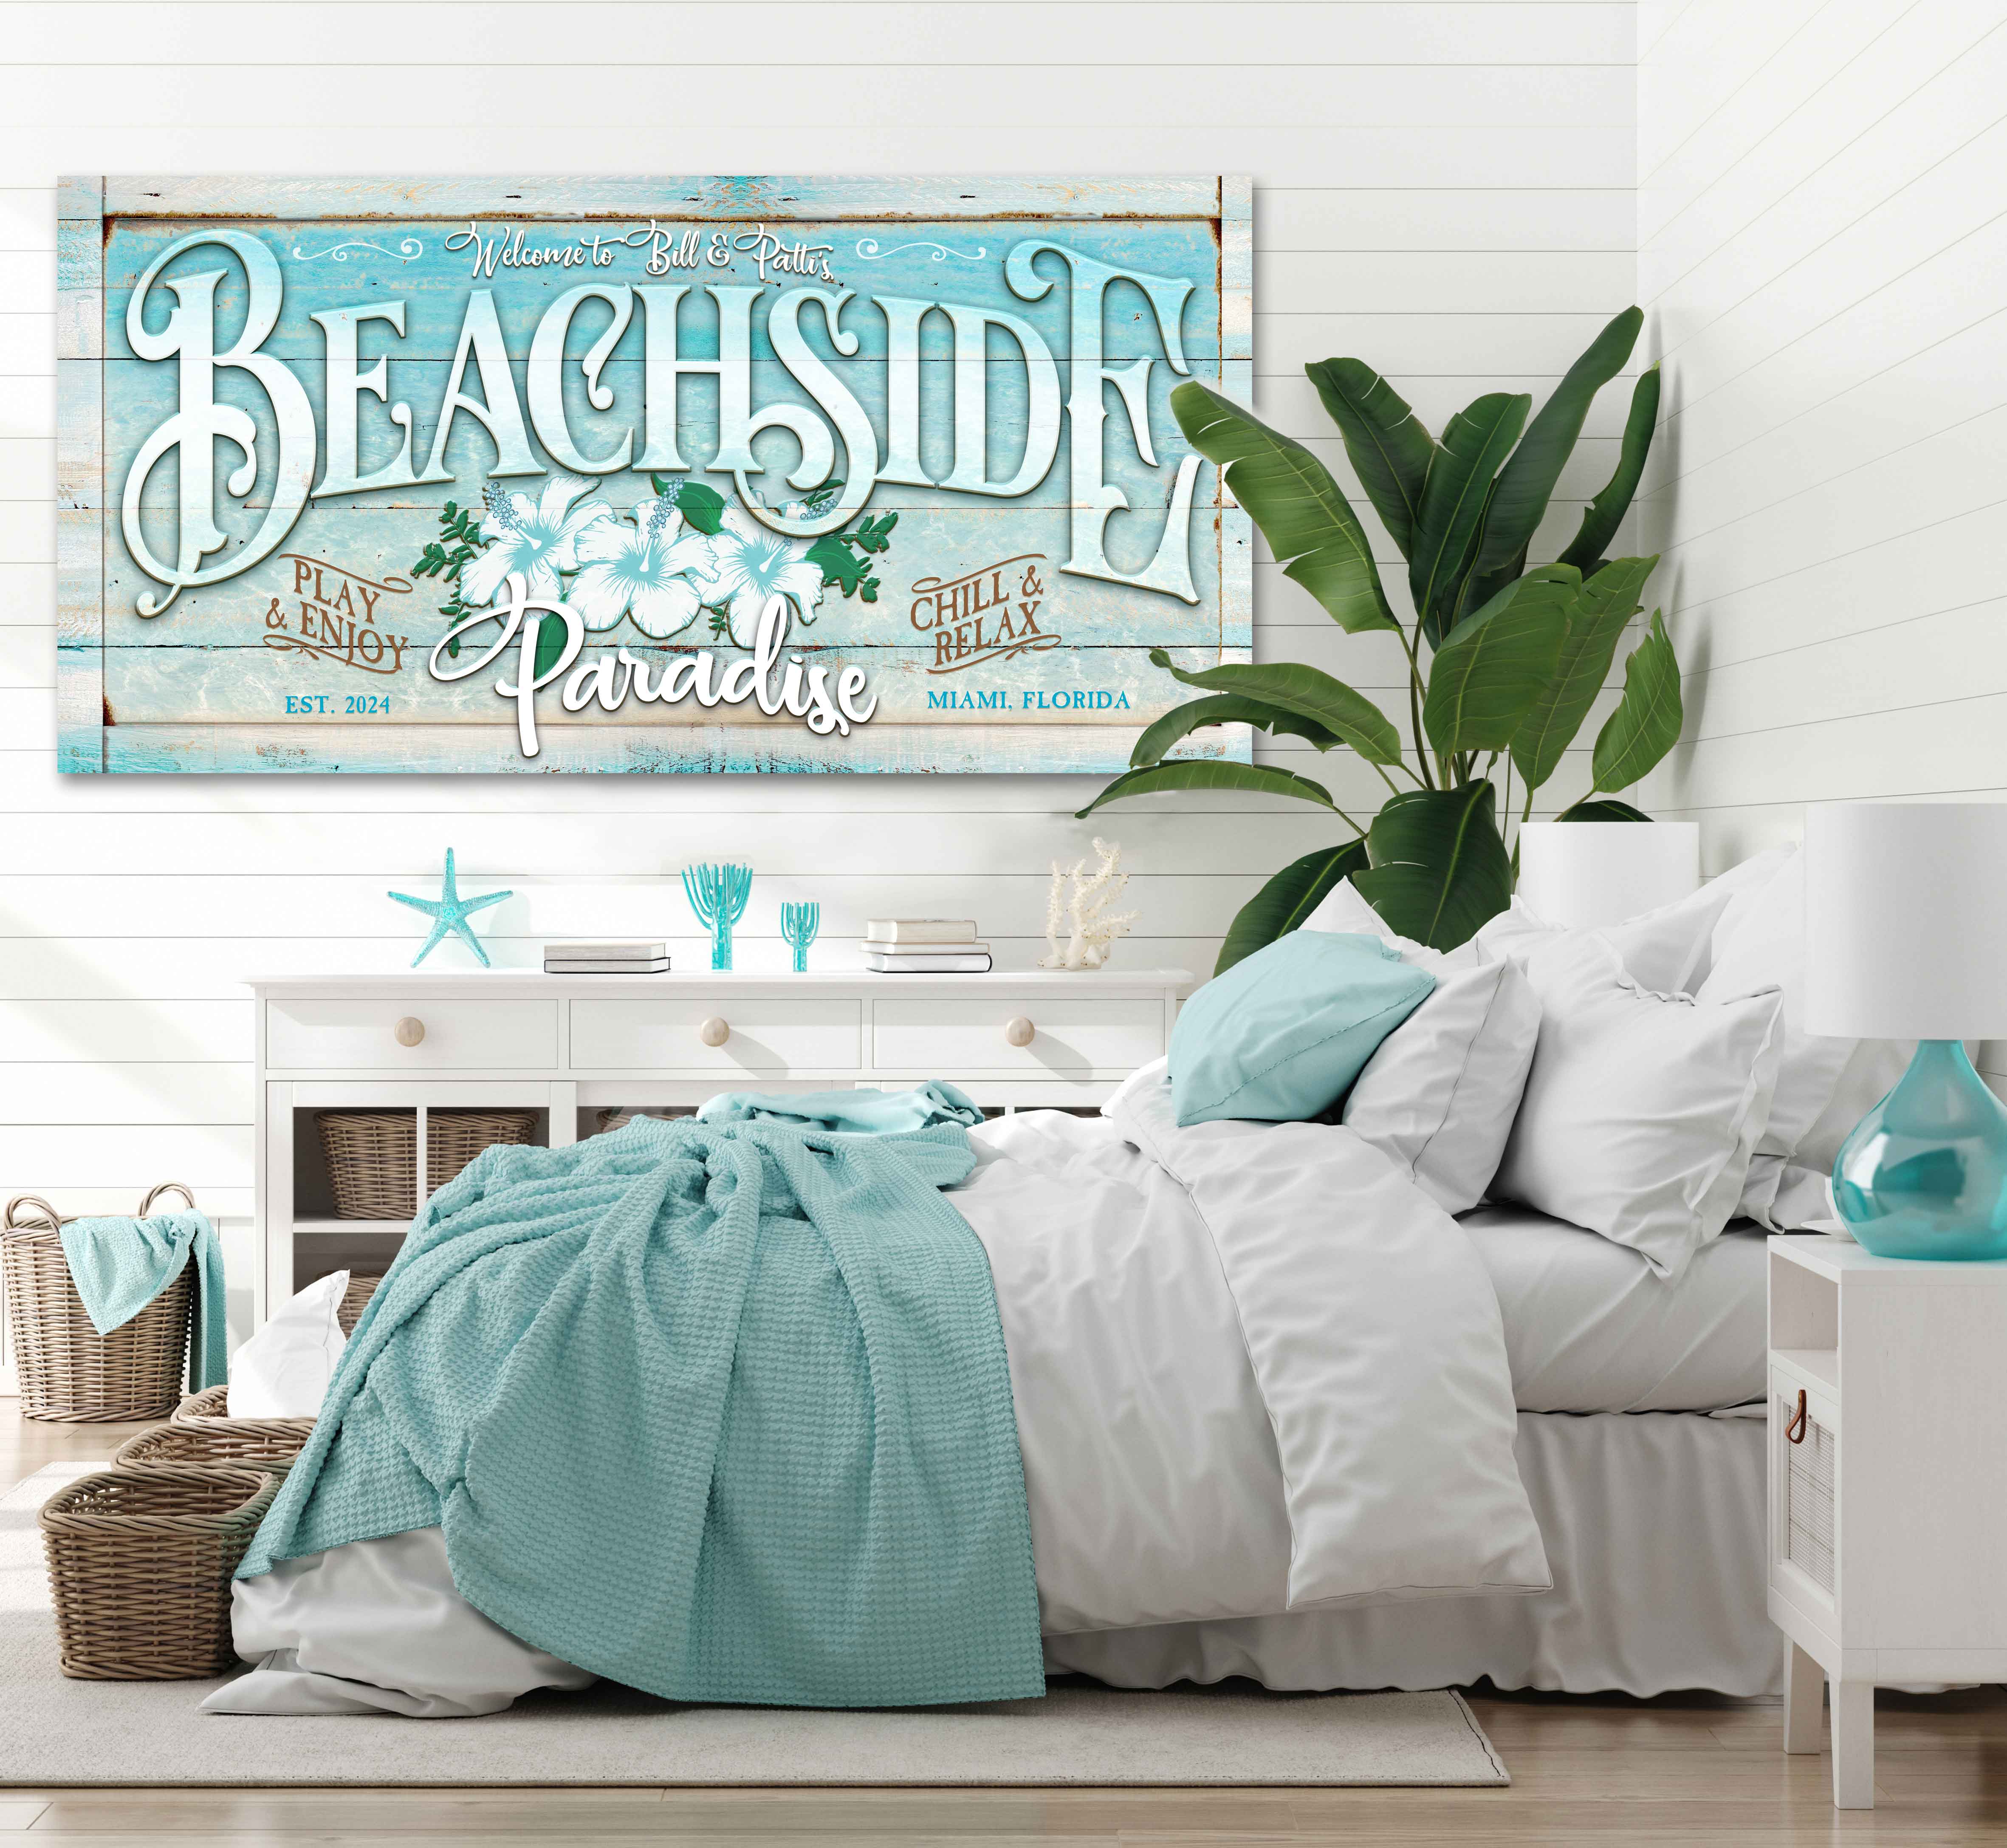 coastal decor sign that says (family name) Beachside Paradise, play and enjoy, wood signs